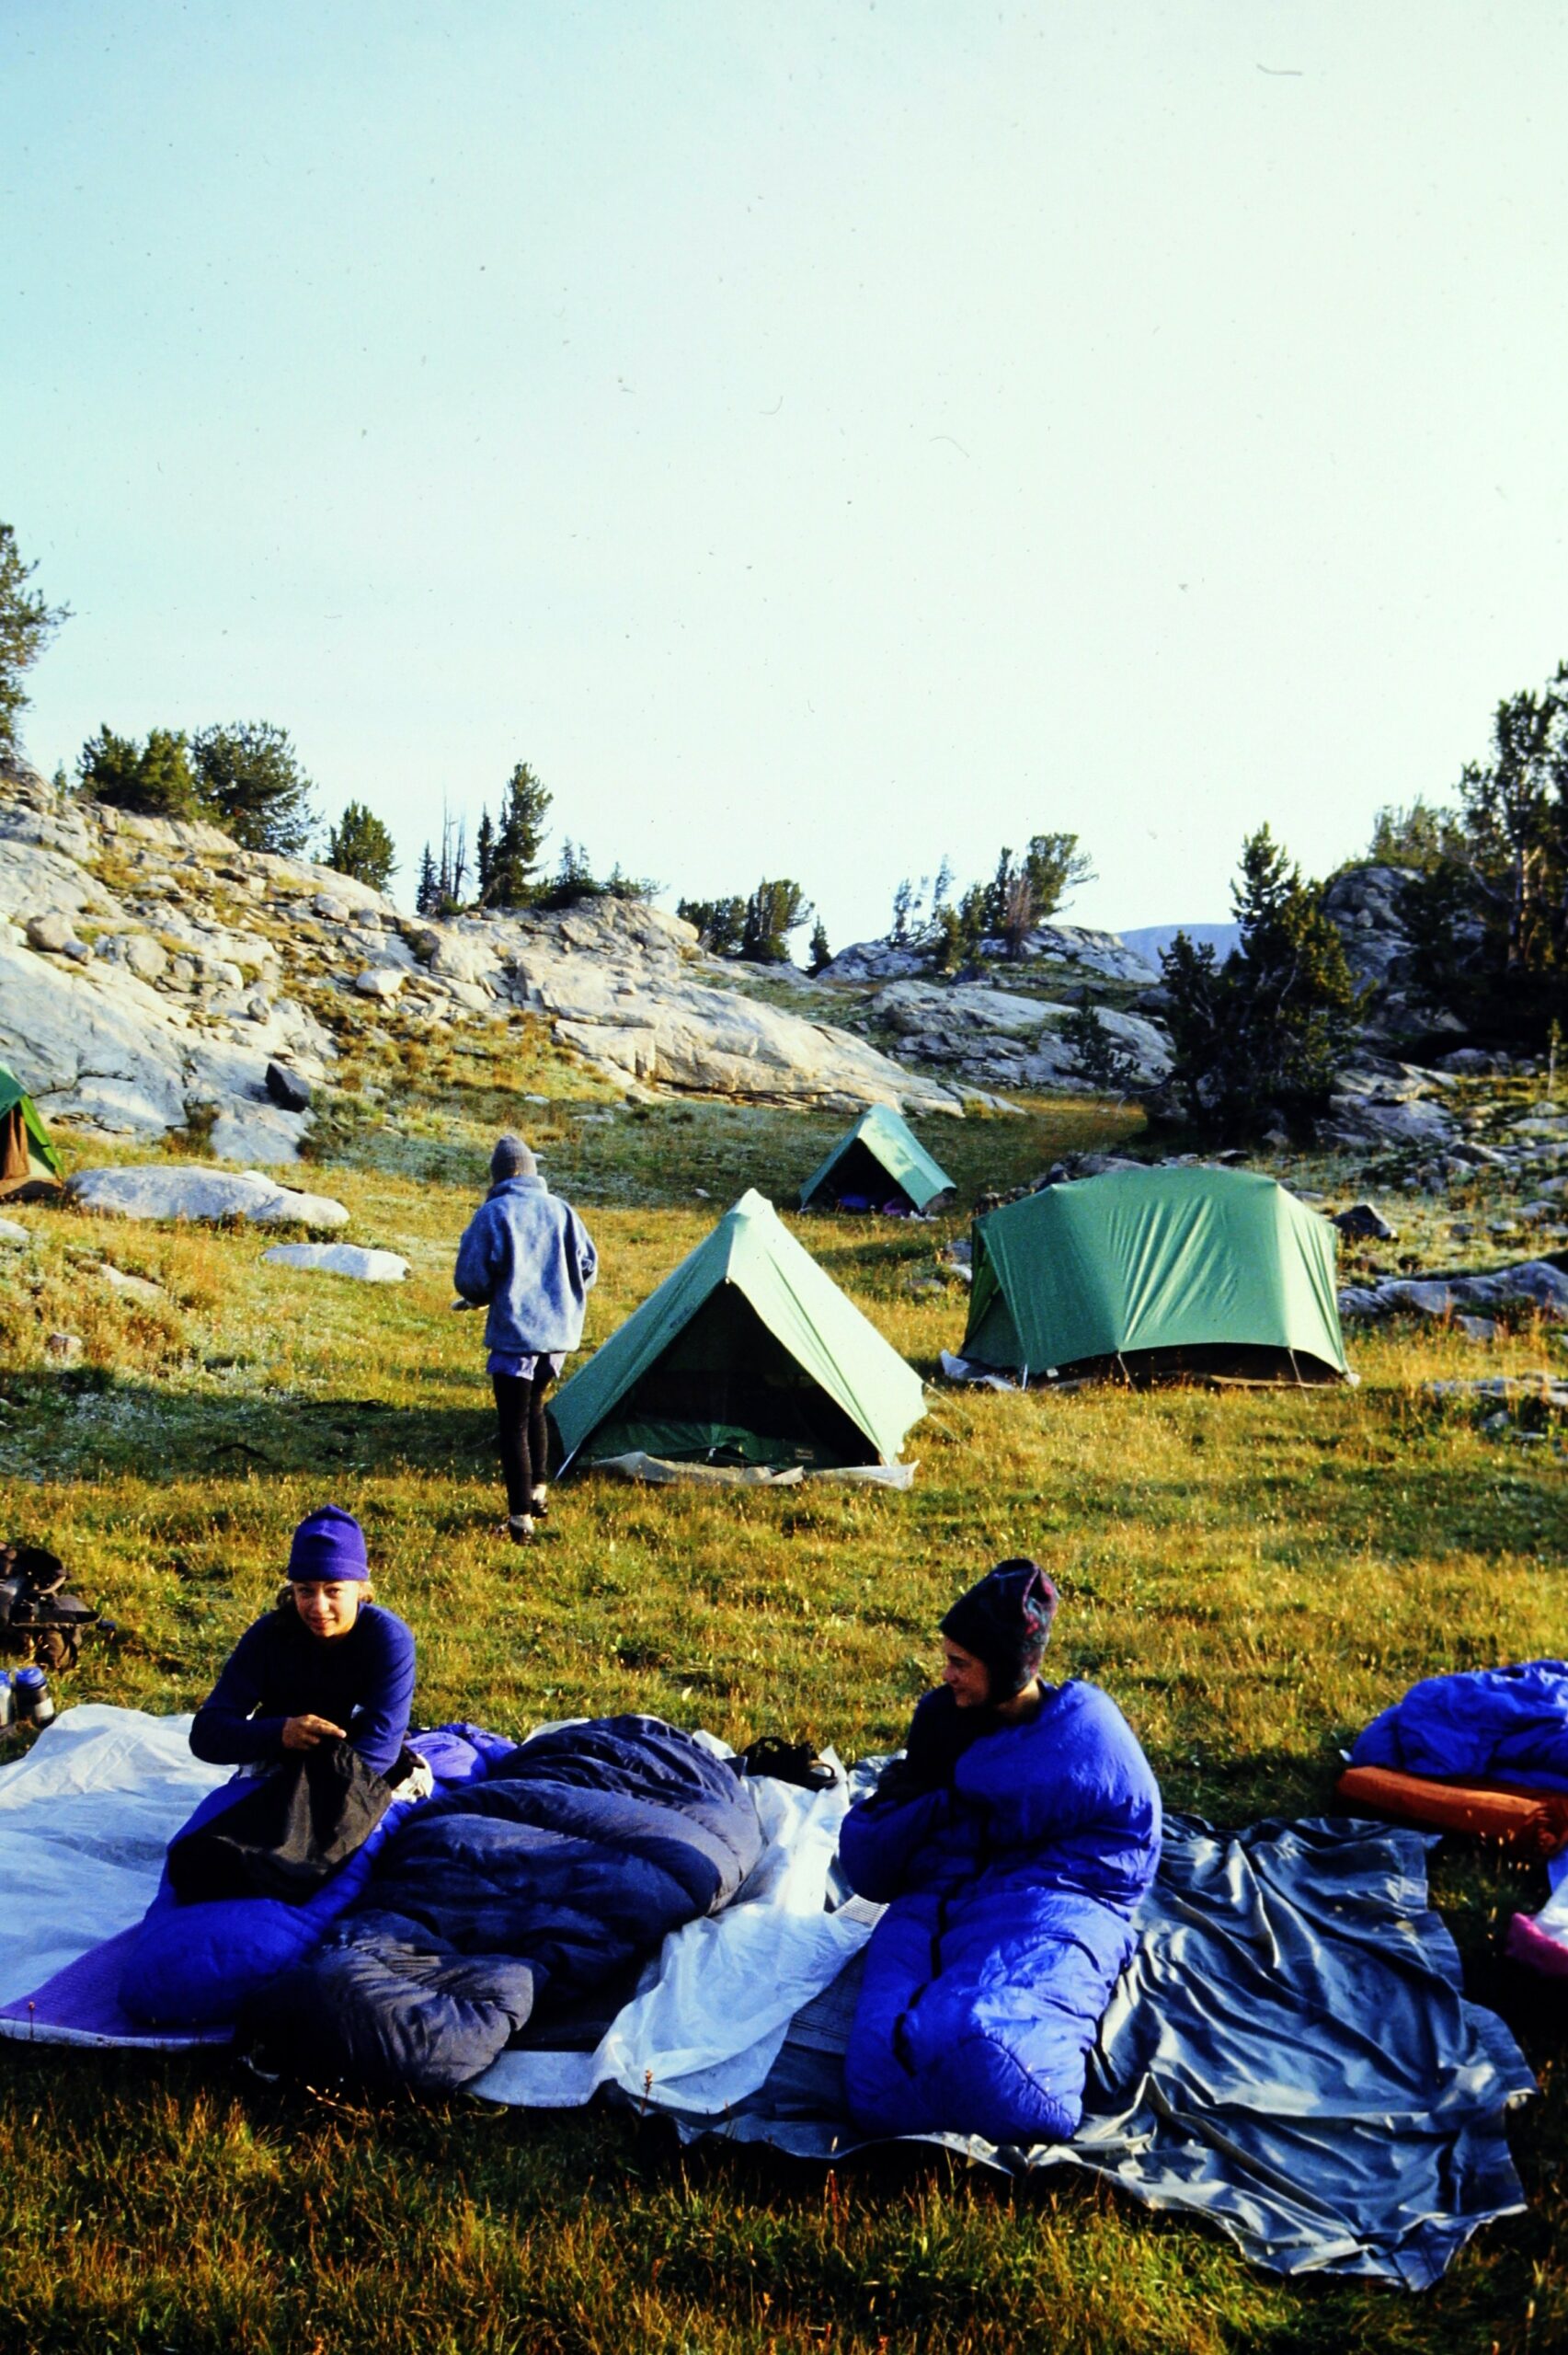 1994 Tent in a Field